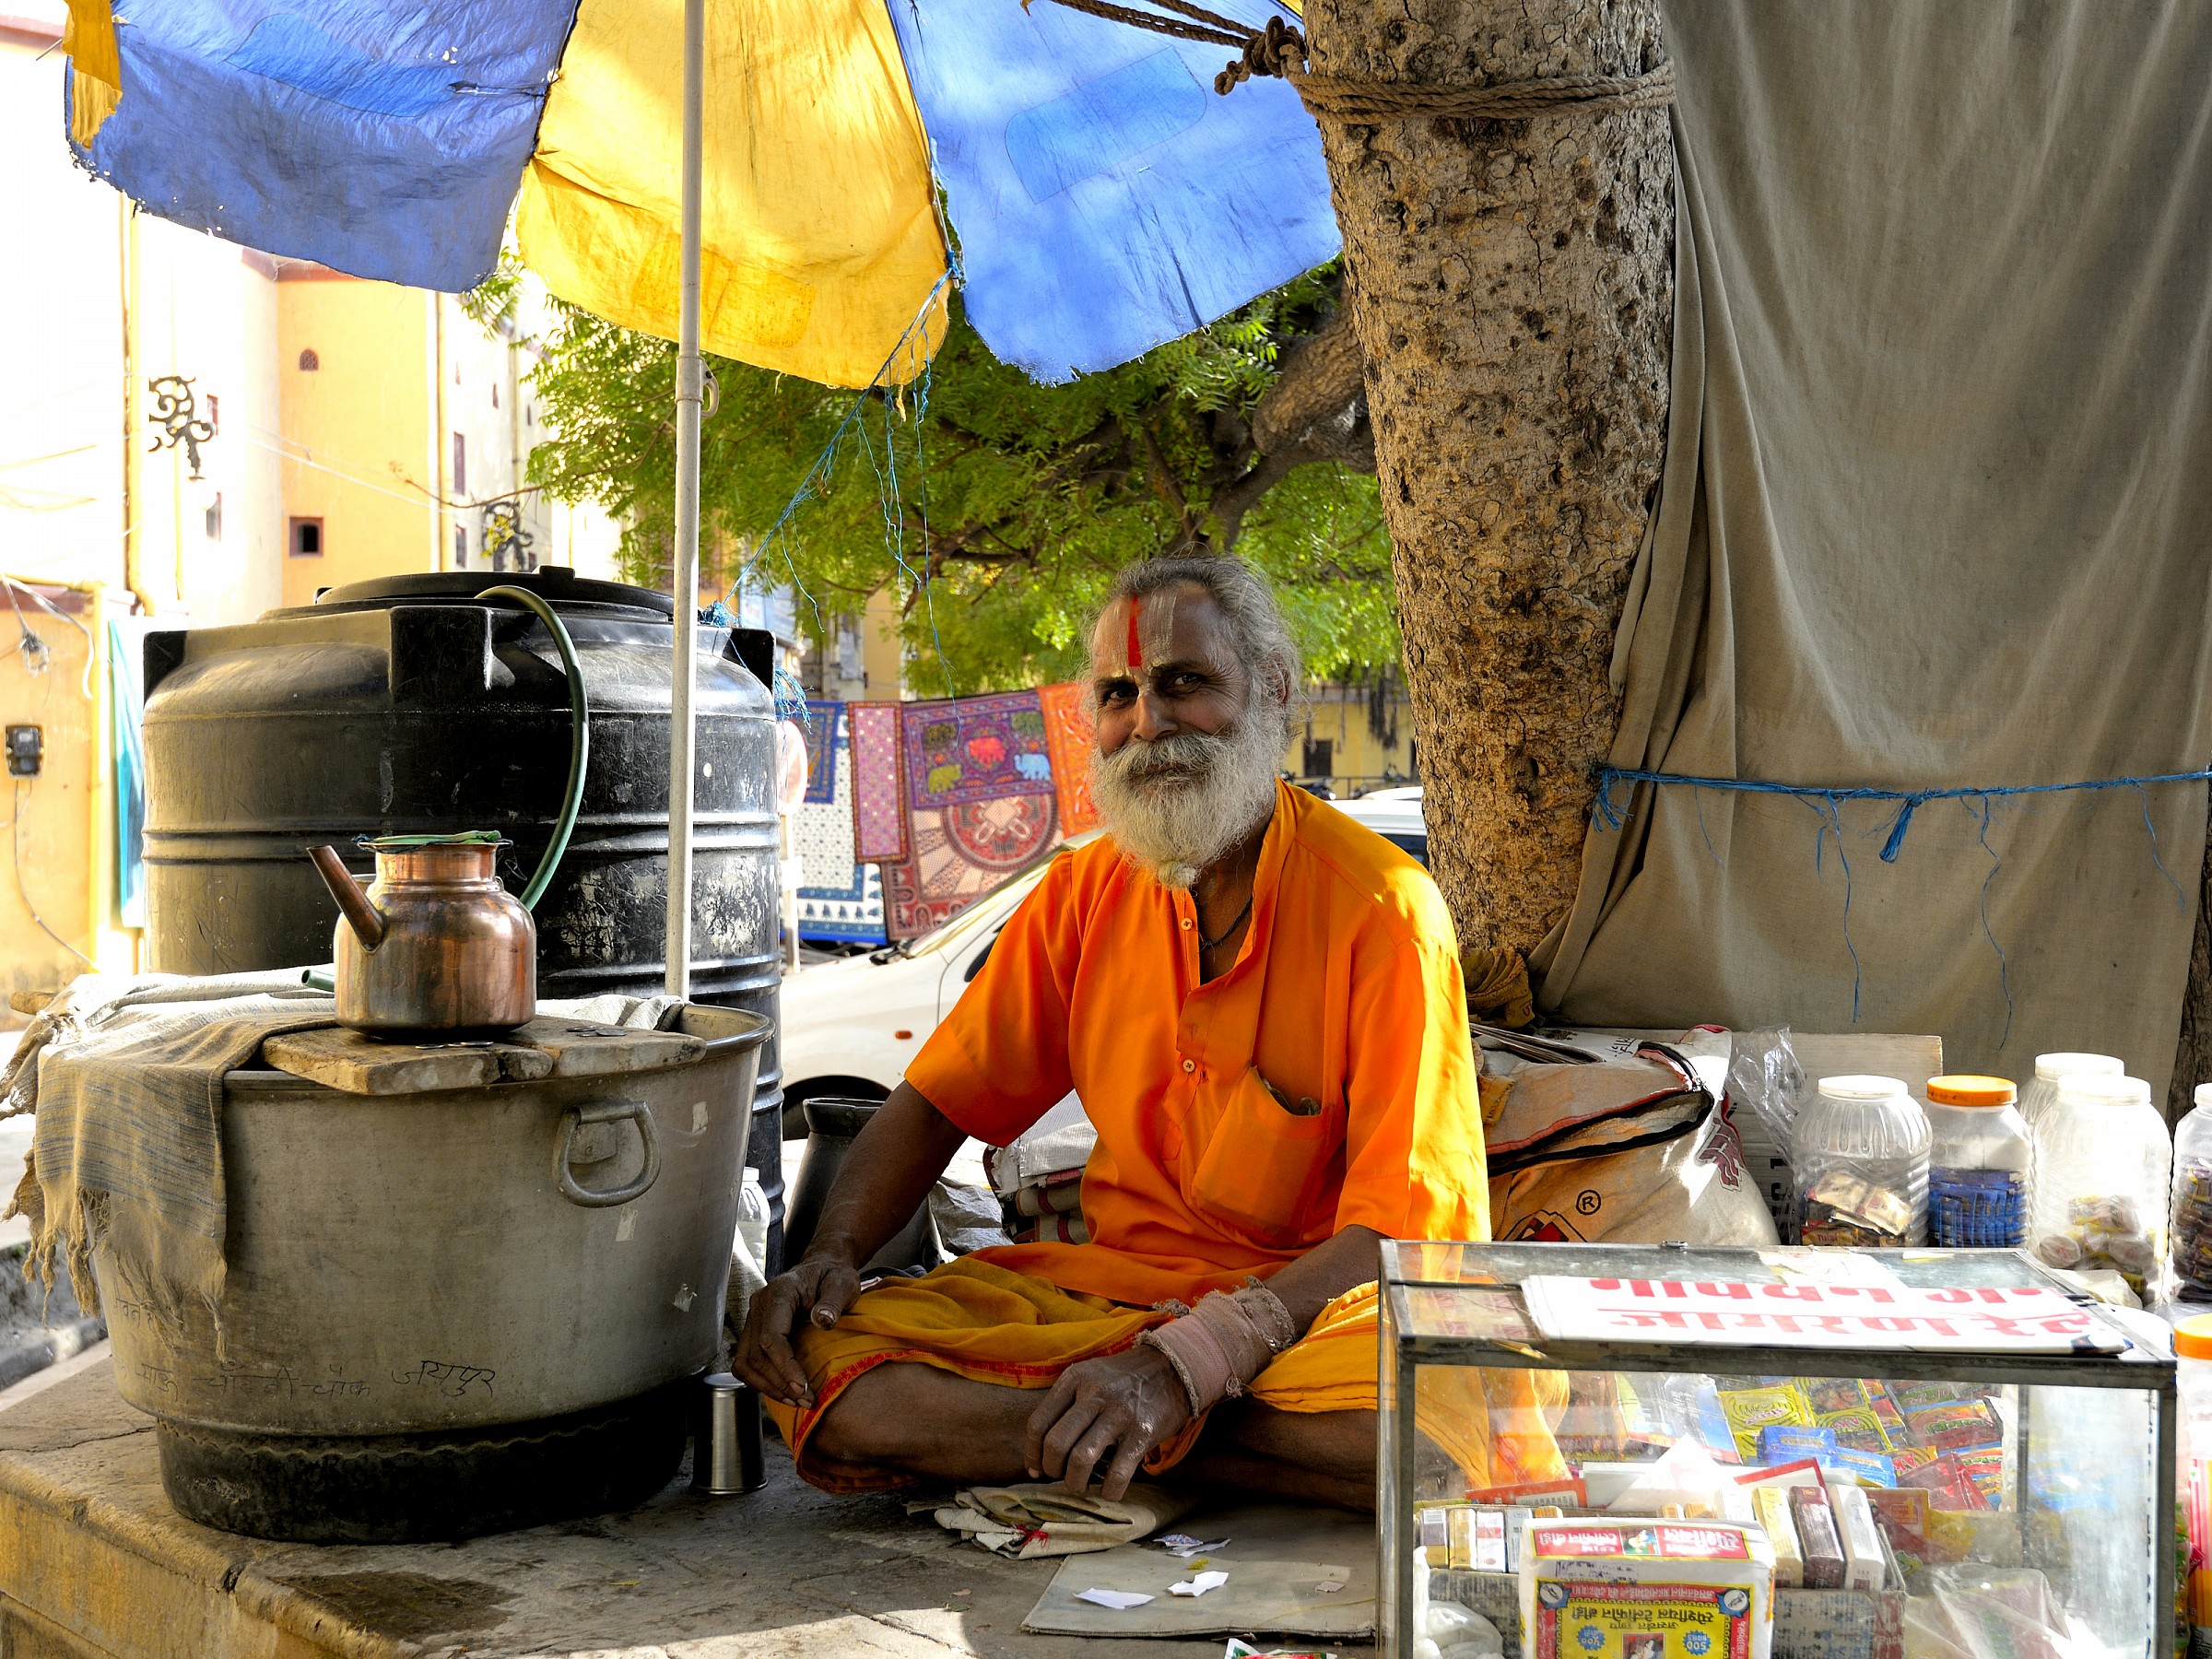 Rajasthan - Jaipur - seller or holy man?...